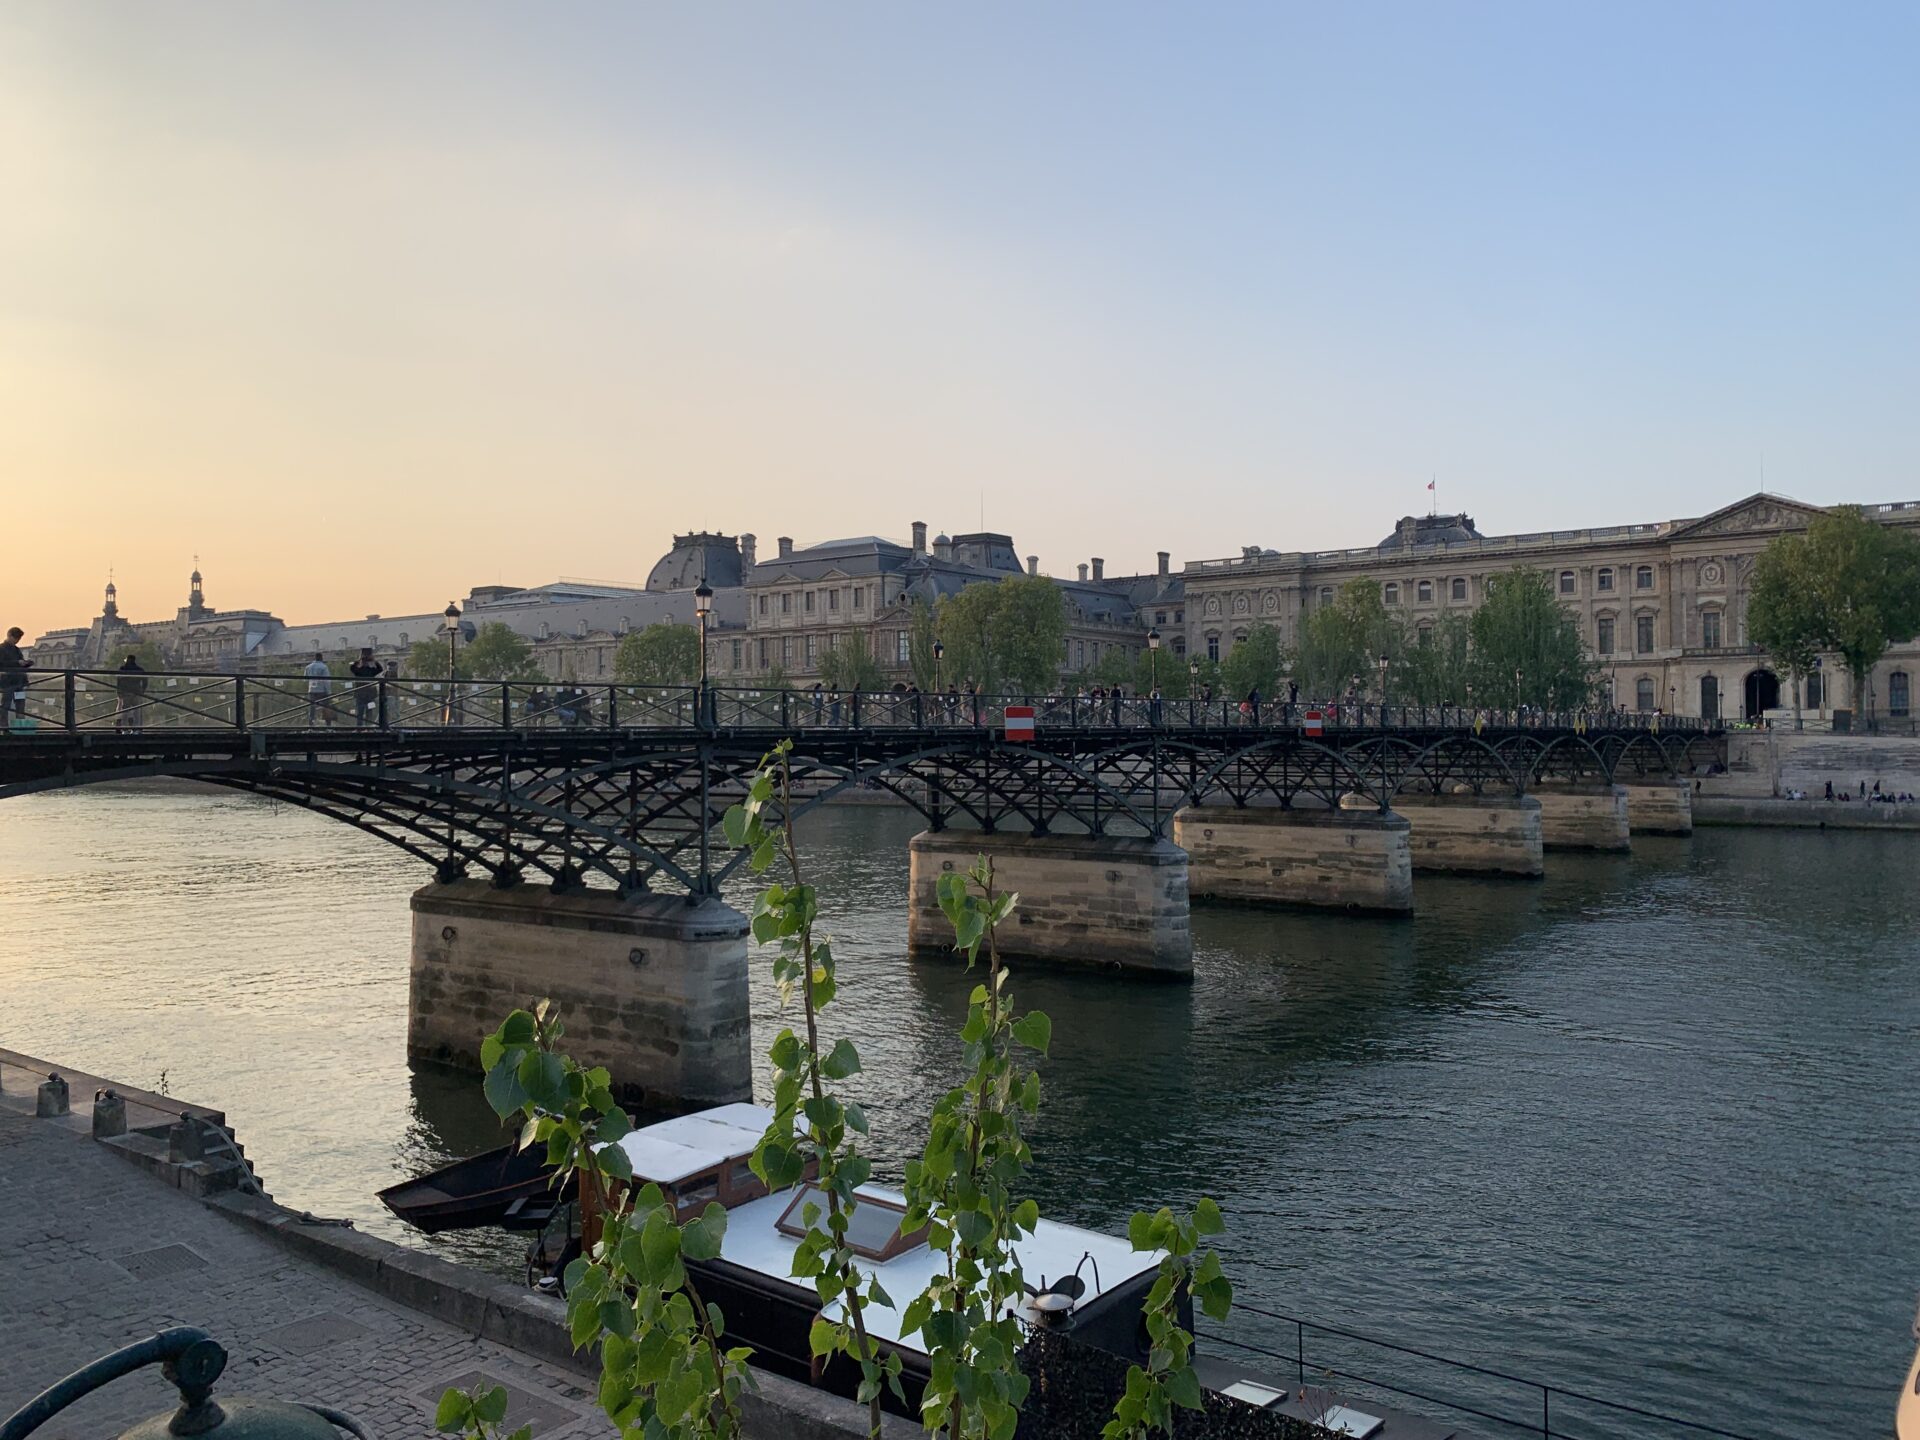 A pedestrian bridge over the river Seine at sunset